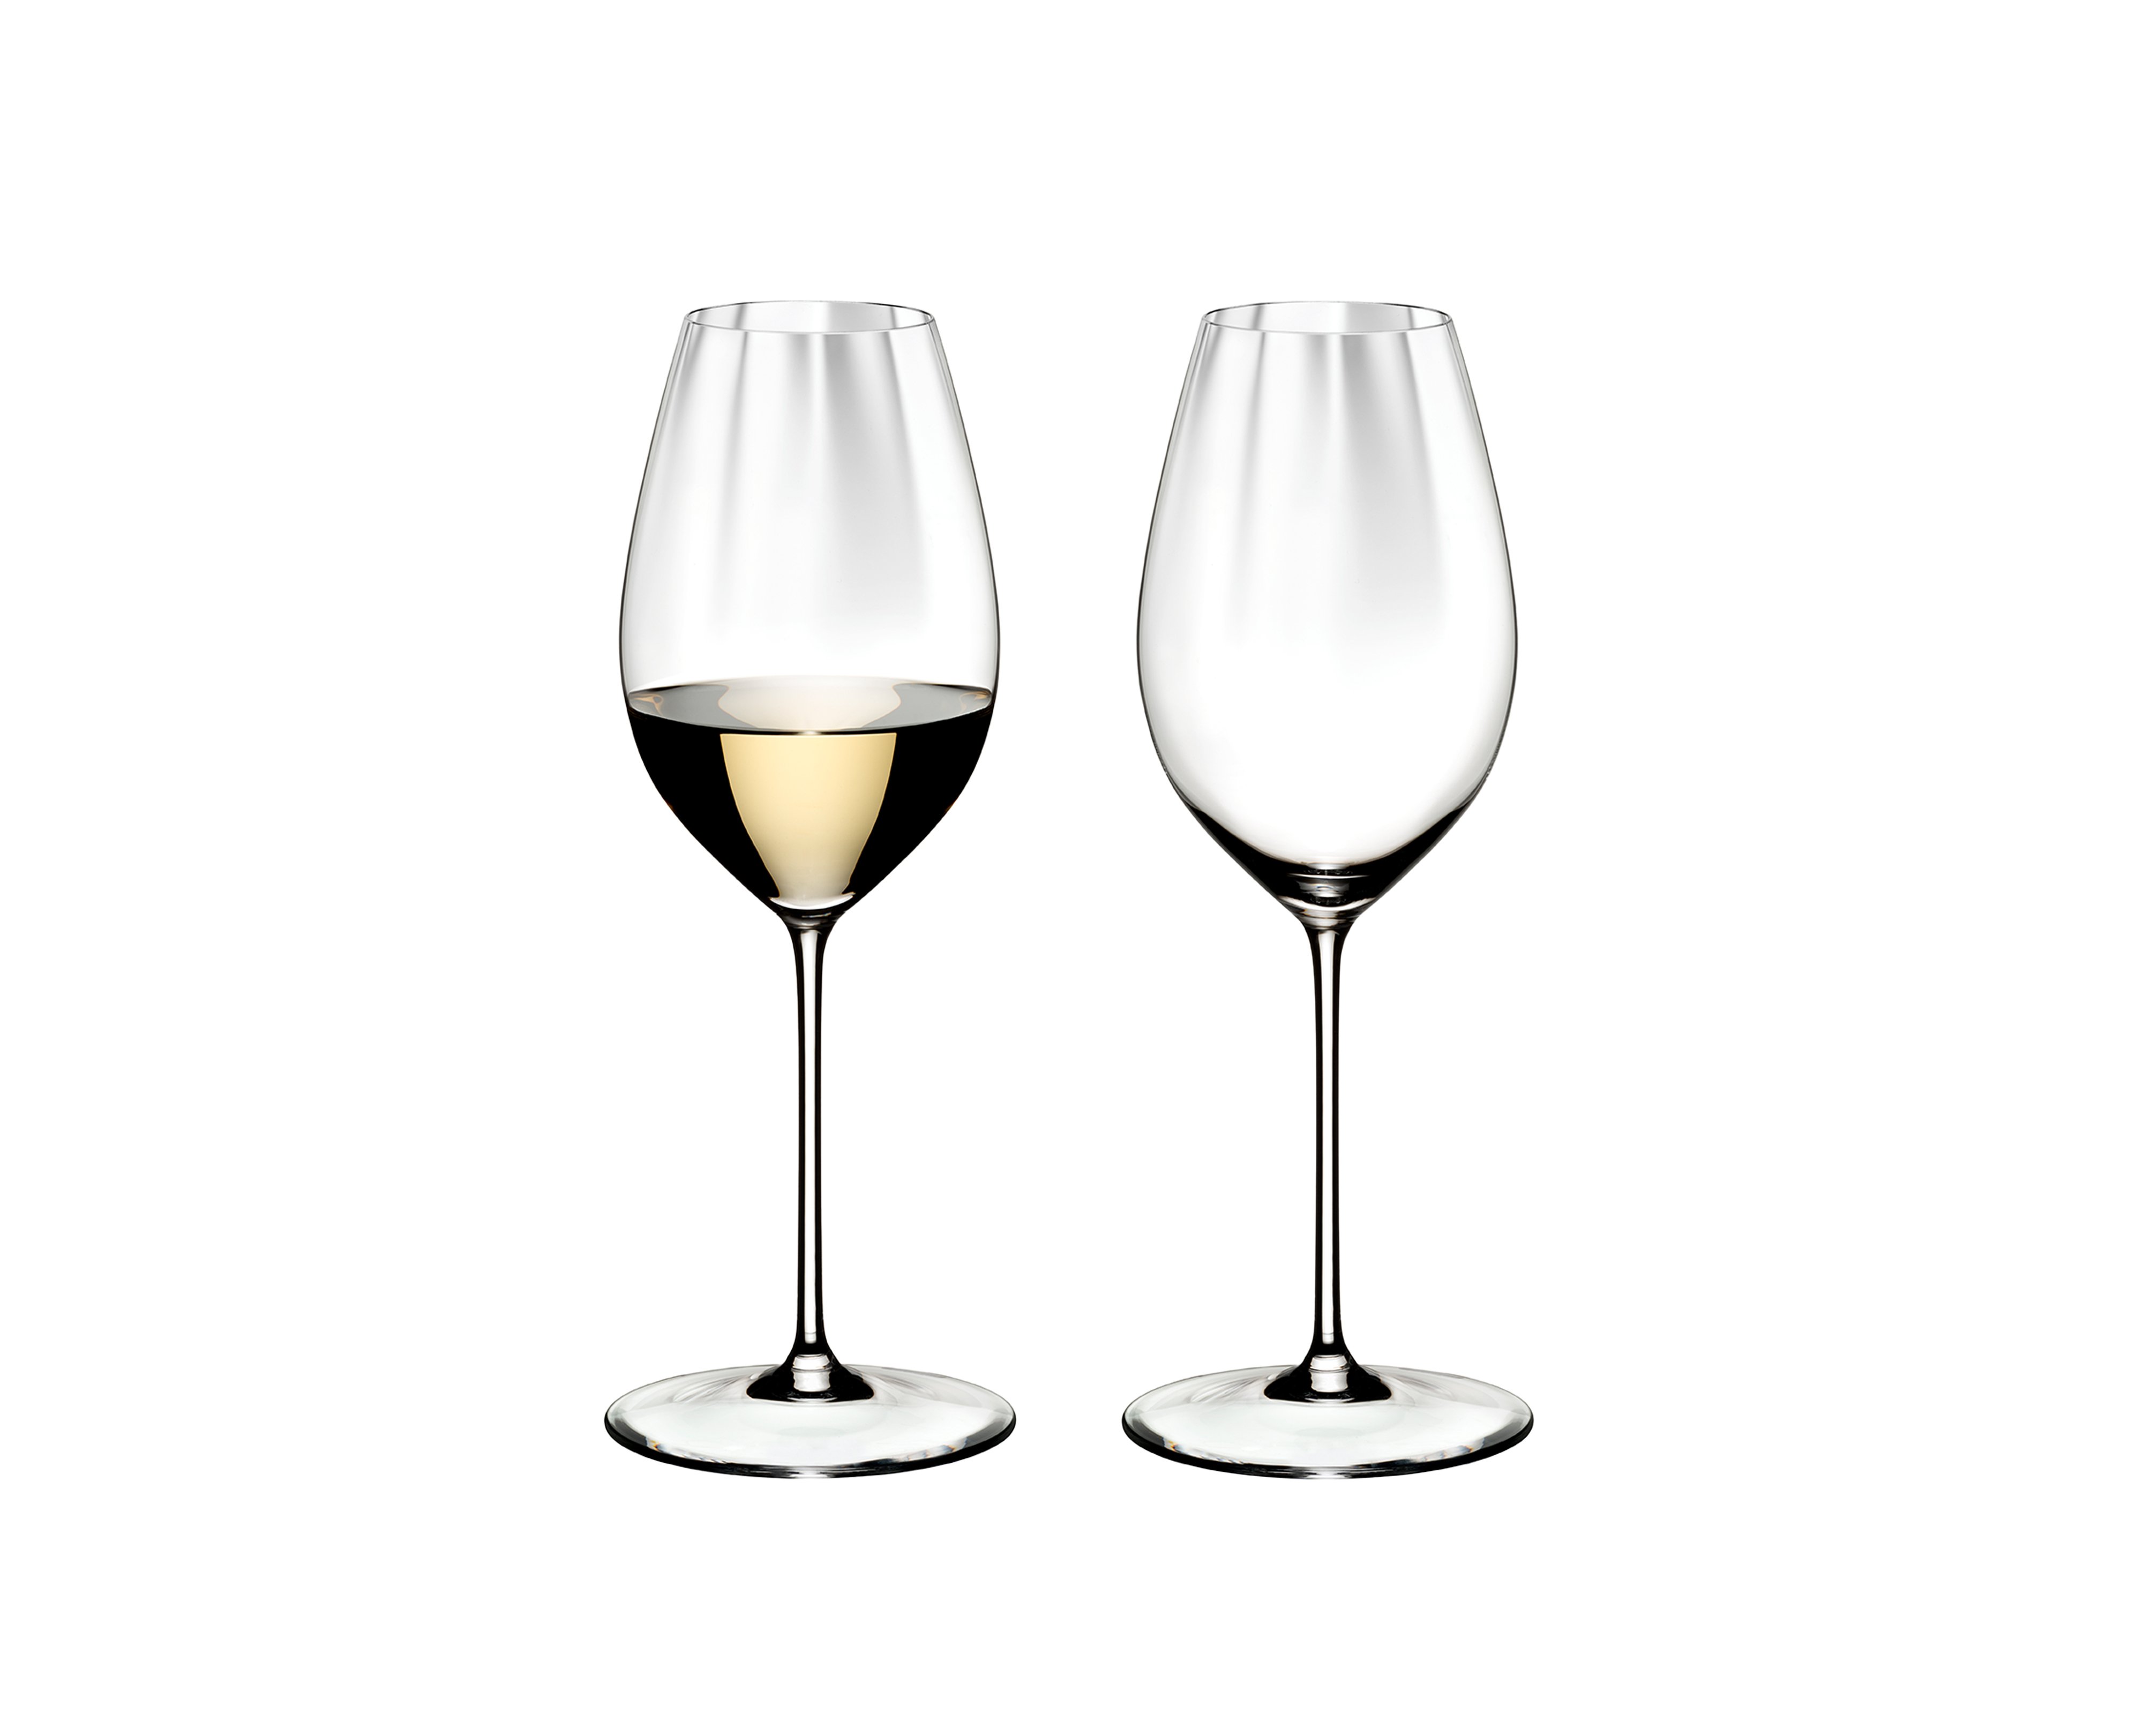 Riedel The O Wine Tumbler Glasses, Riesling/Sauvignon Blanc - 2 pieces